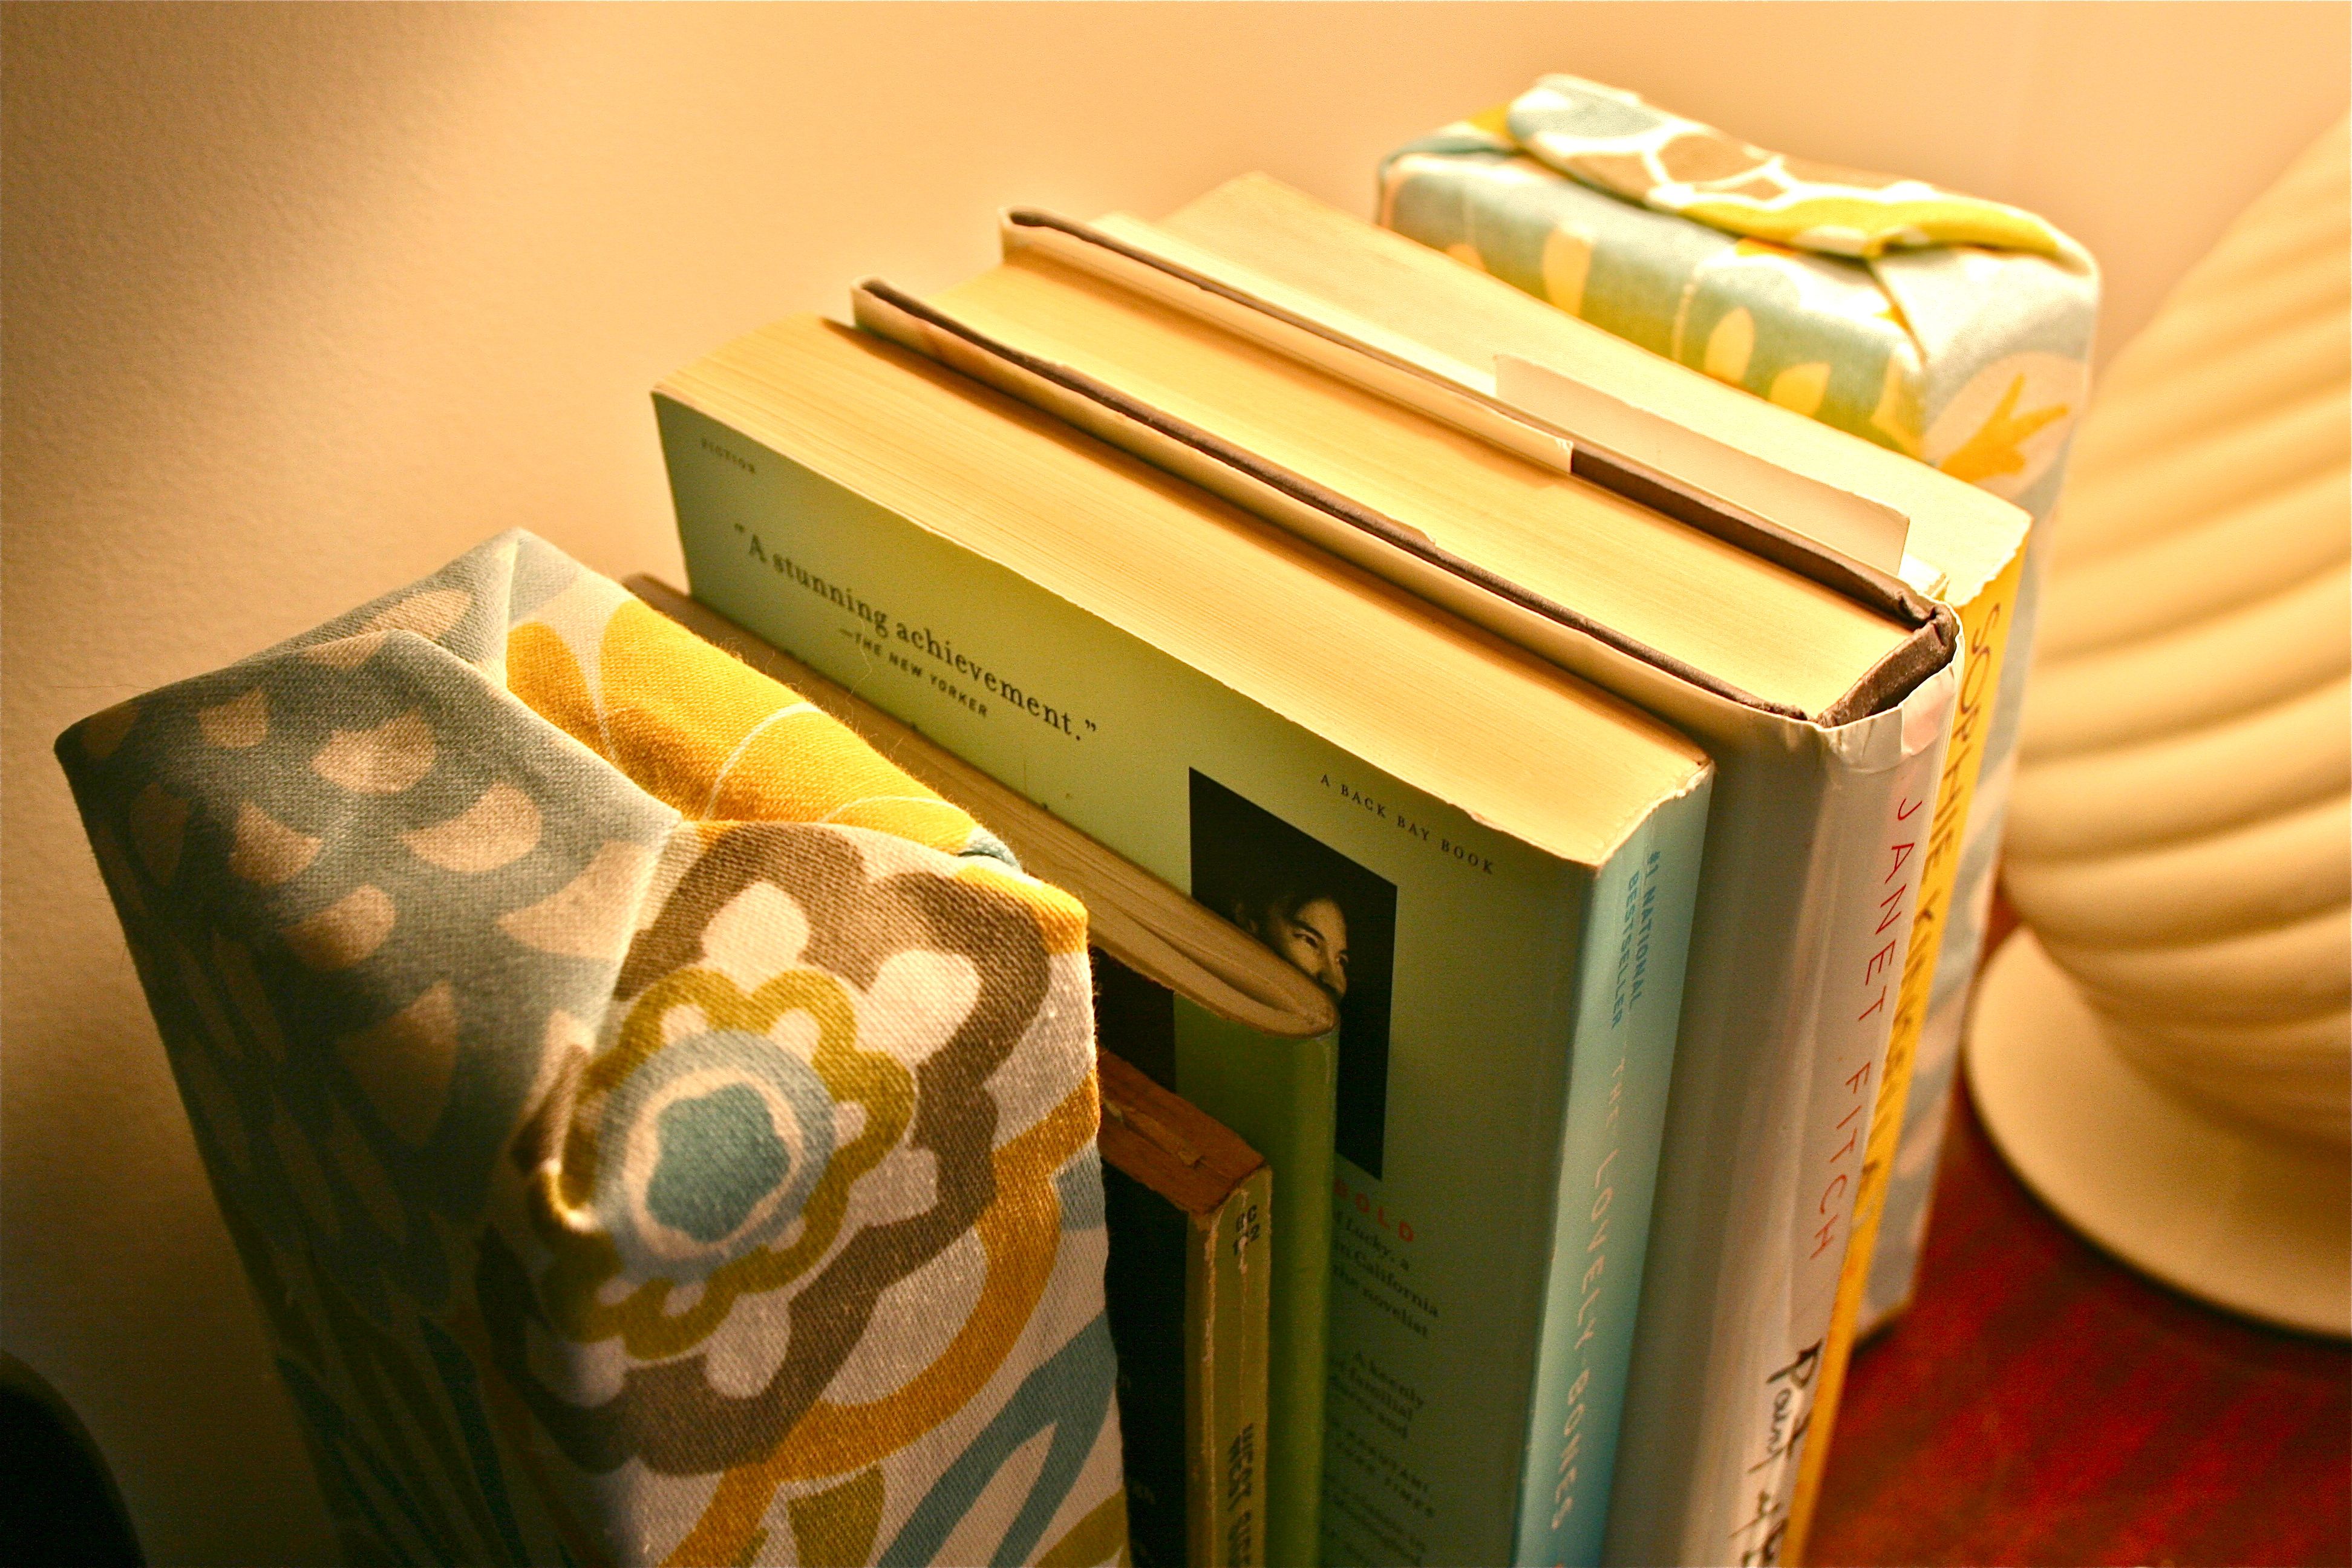 How To Style A Tall Skinny Bookshelf - Dream Green DIY